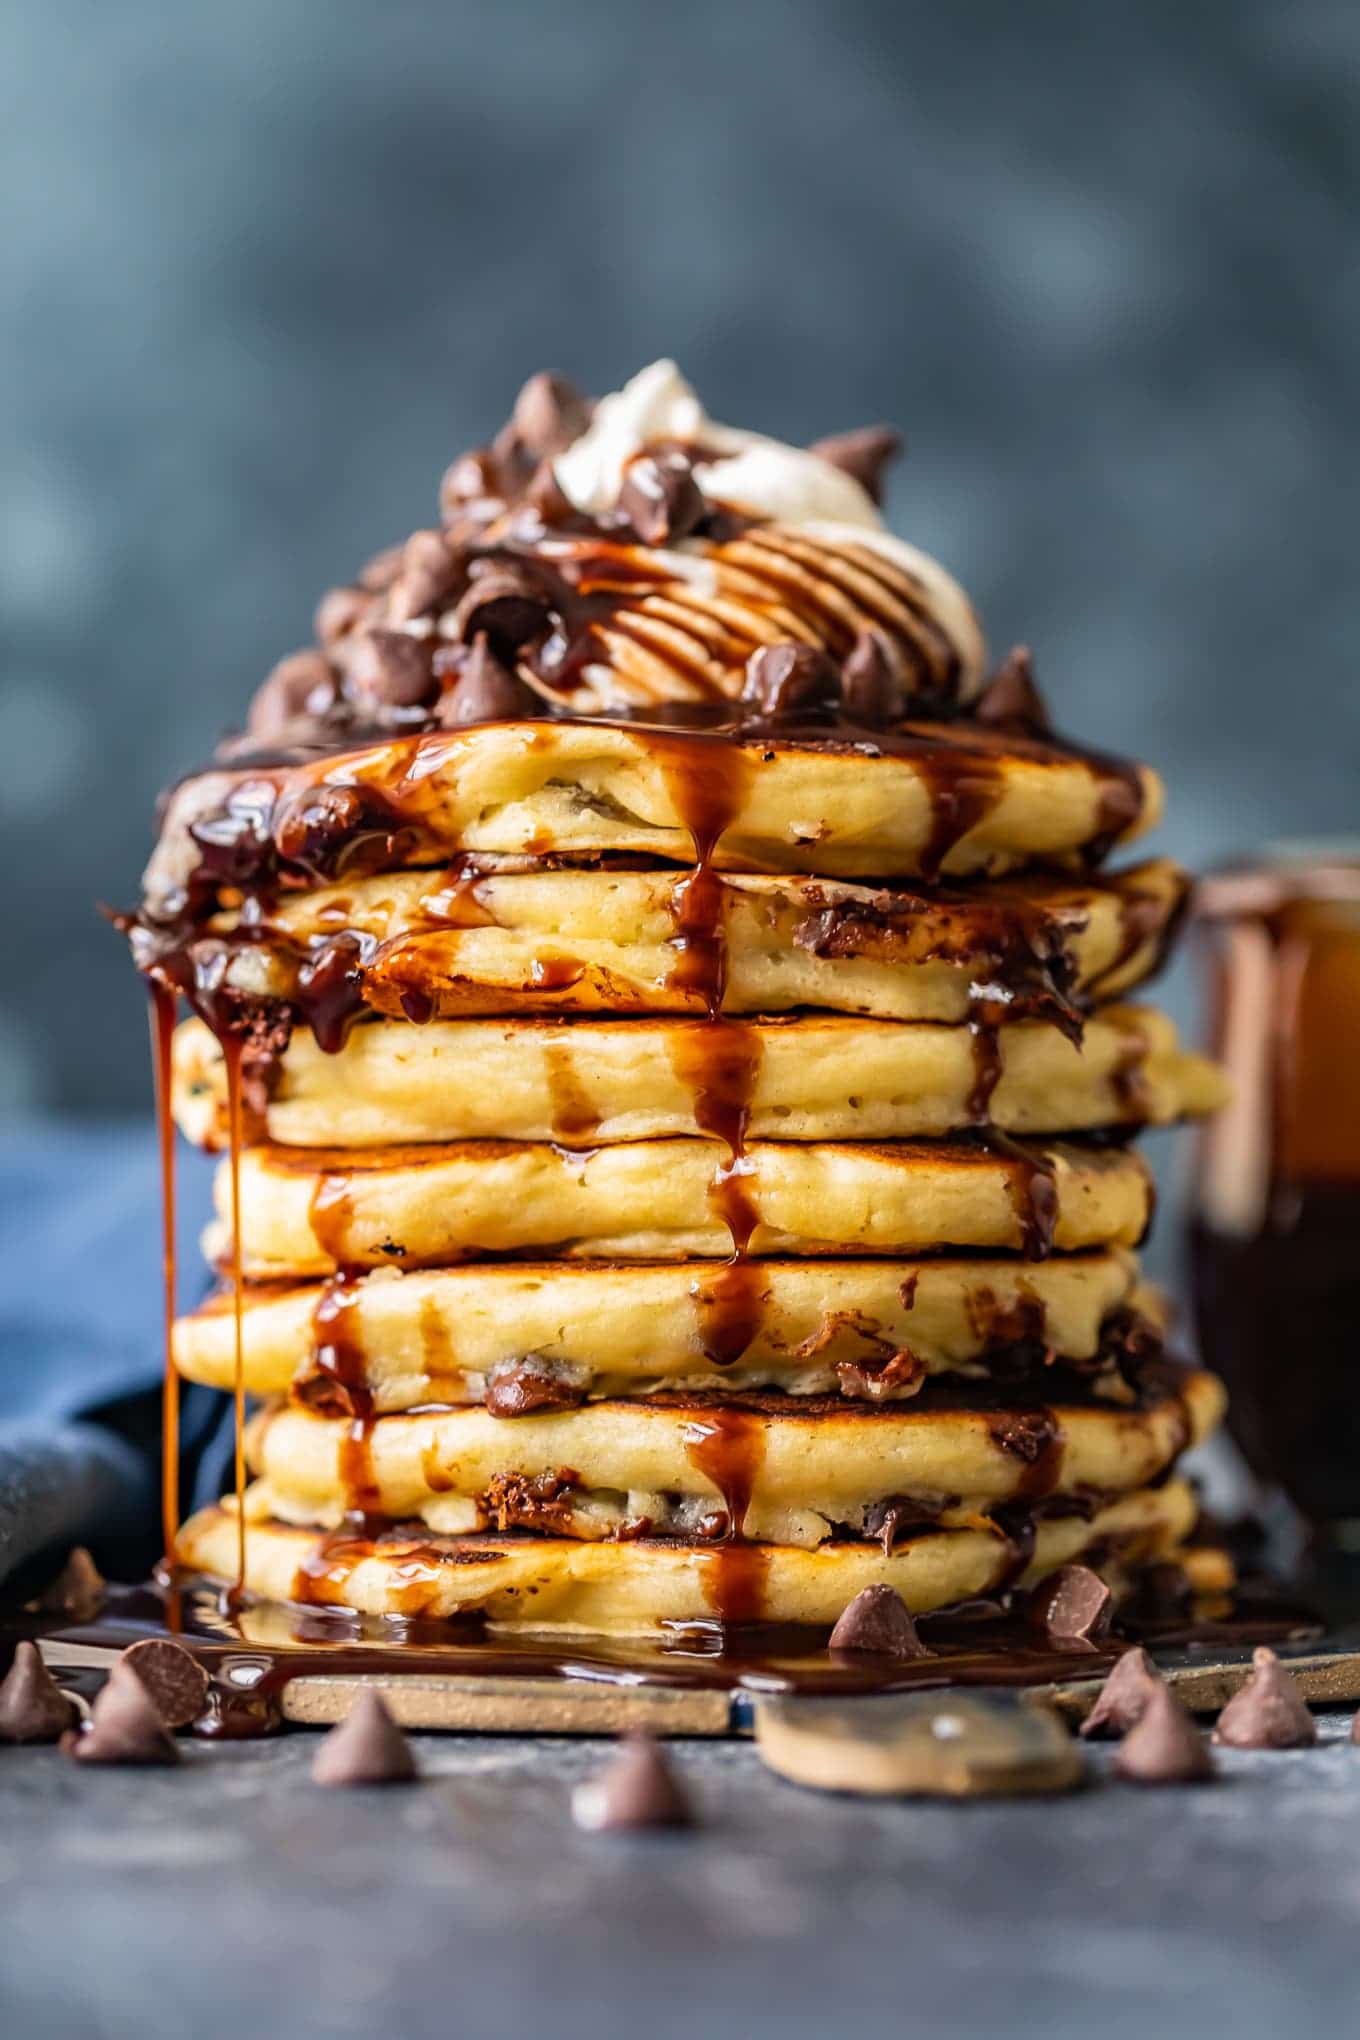 chocoalte-chip-pancakes-chocolate-syrup-6-of-8.jpg